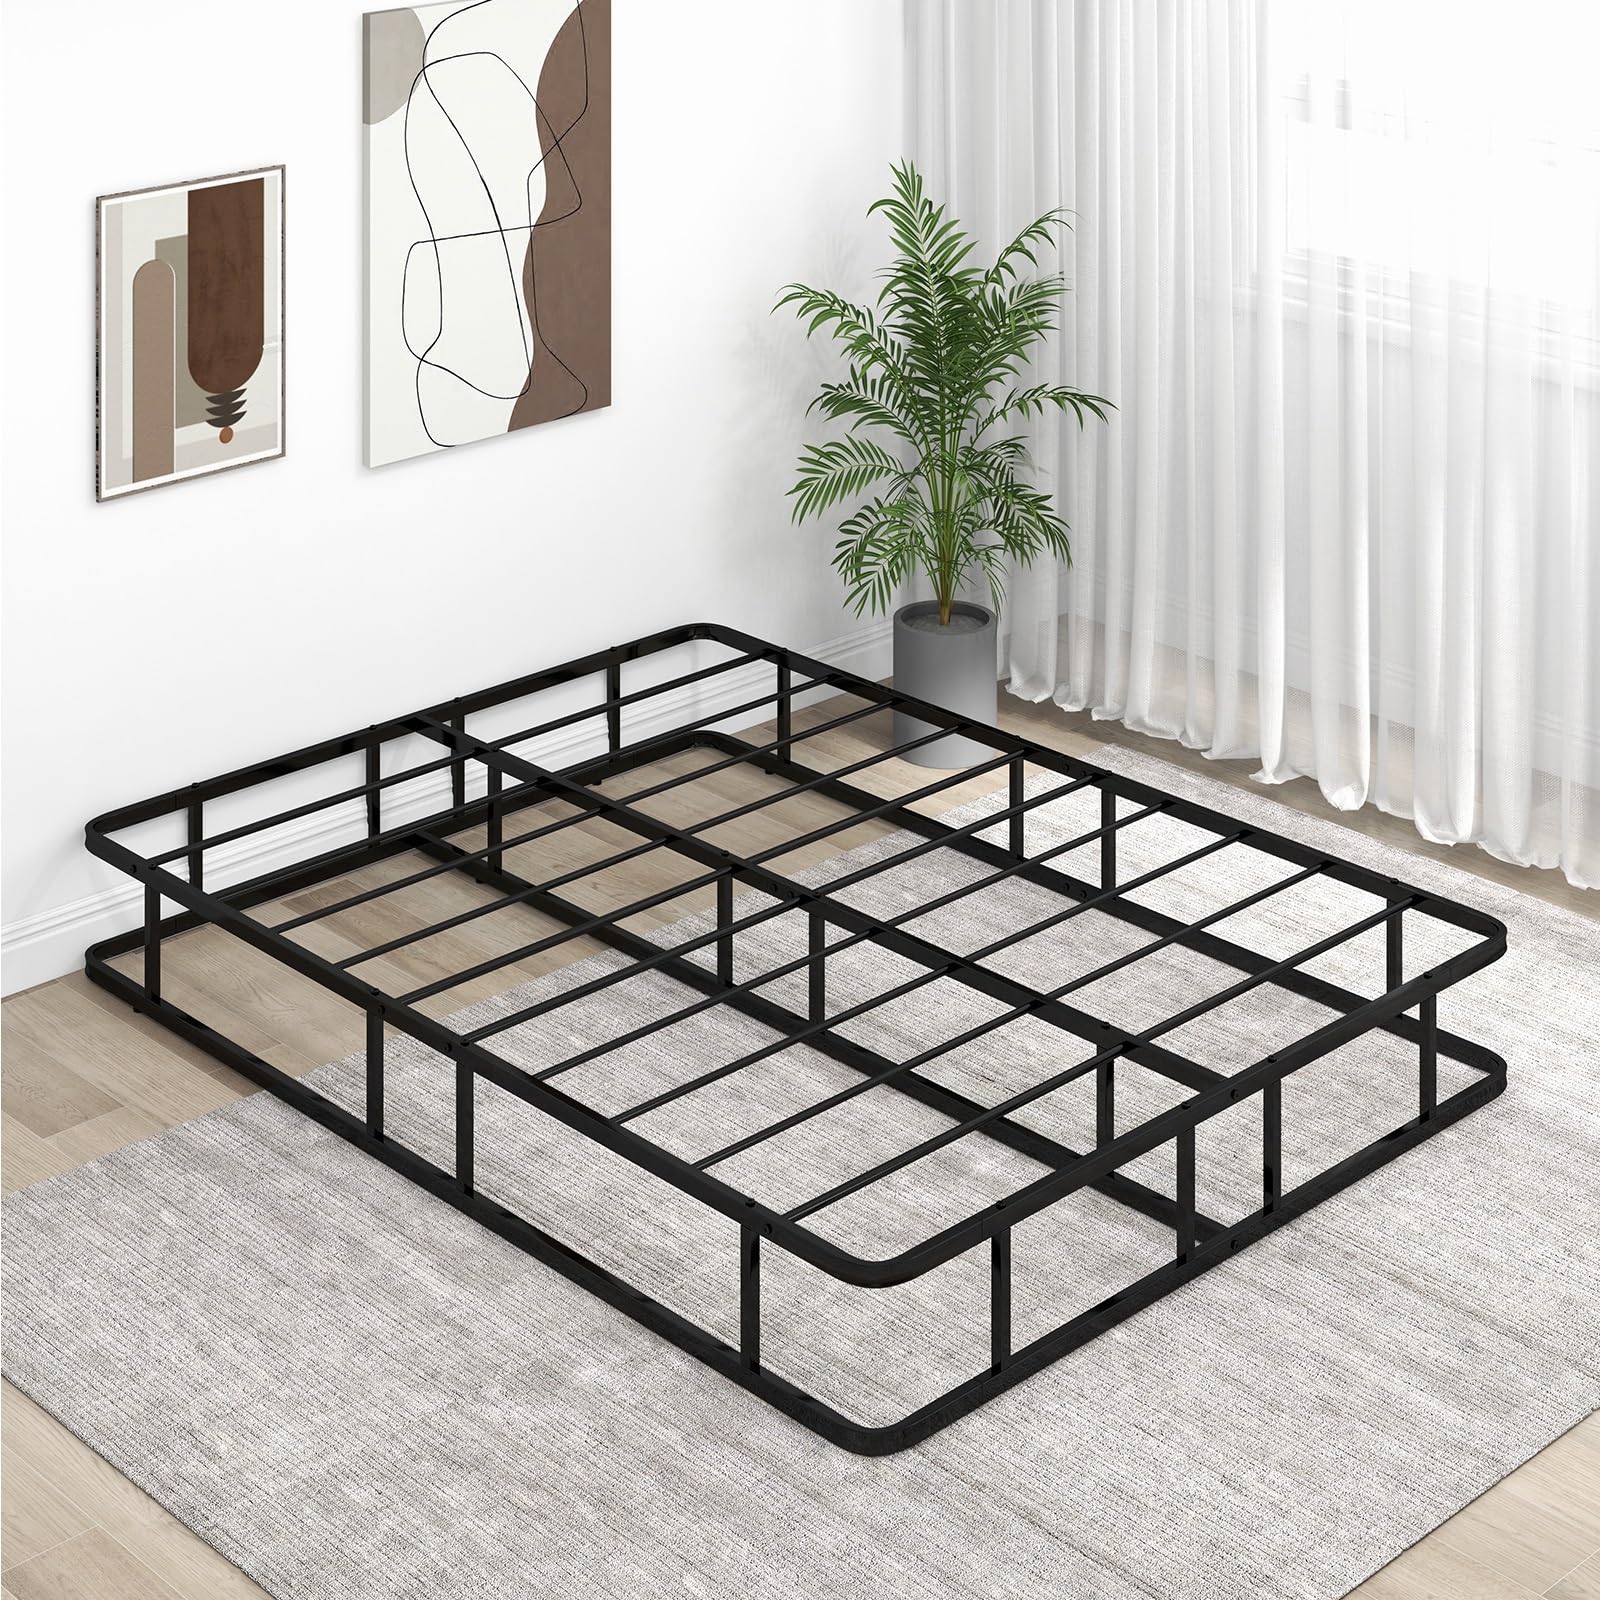 Giantex 10 Inch Bed Frame Queen Size, Metal Platform Queen Bed Frame, Heavy Duty Steel Slat Support